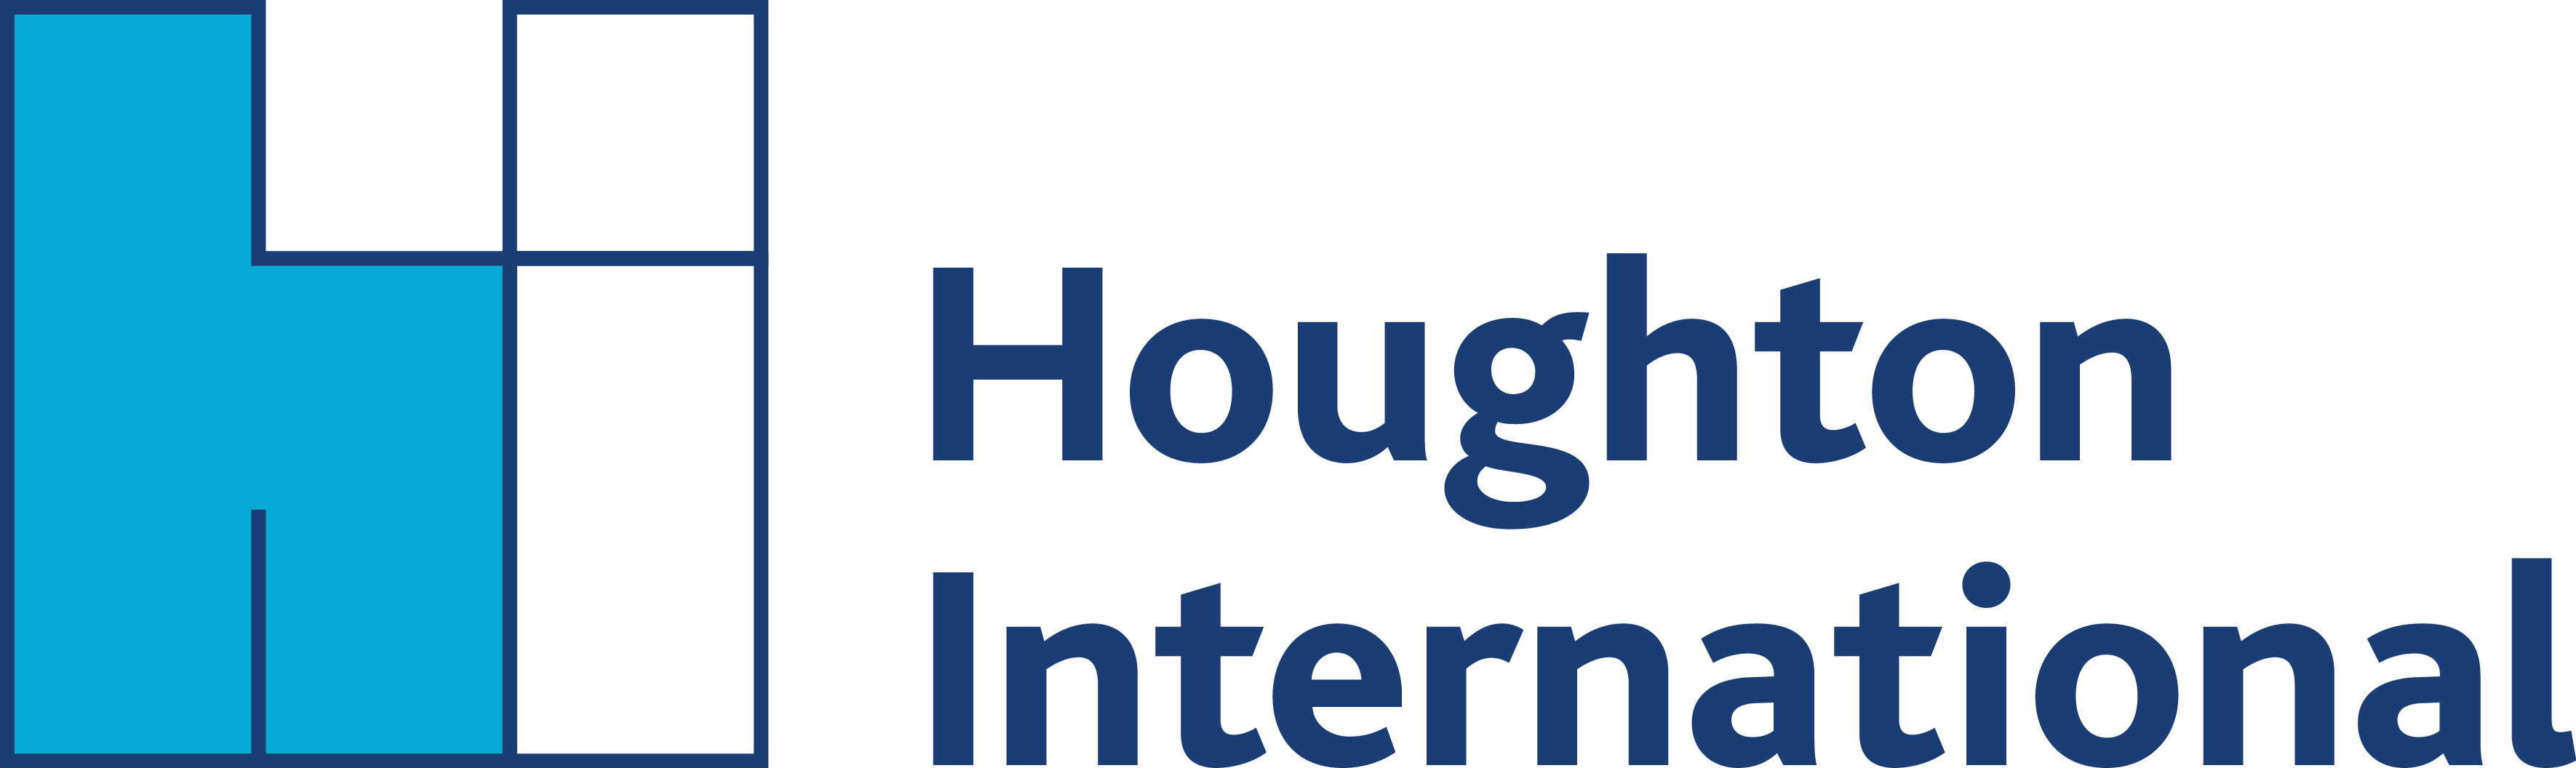 Houghton International Ltd. Mr Michael Mitten